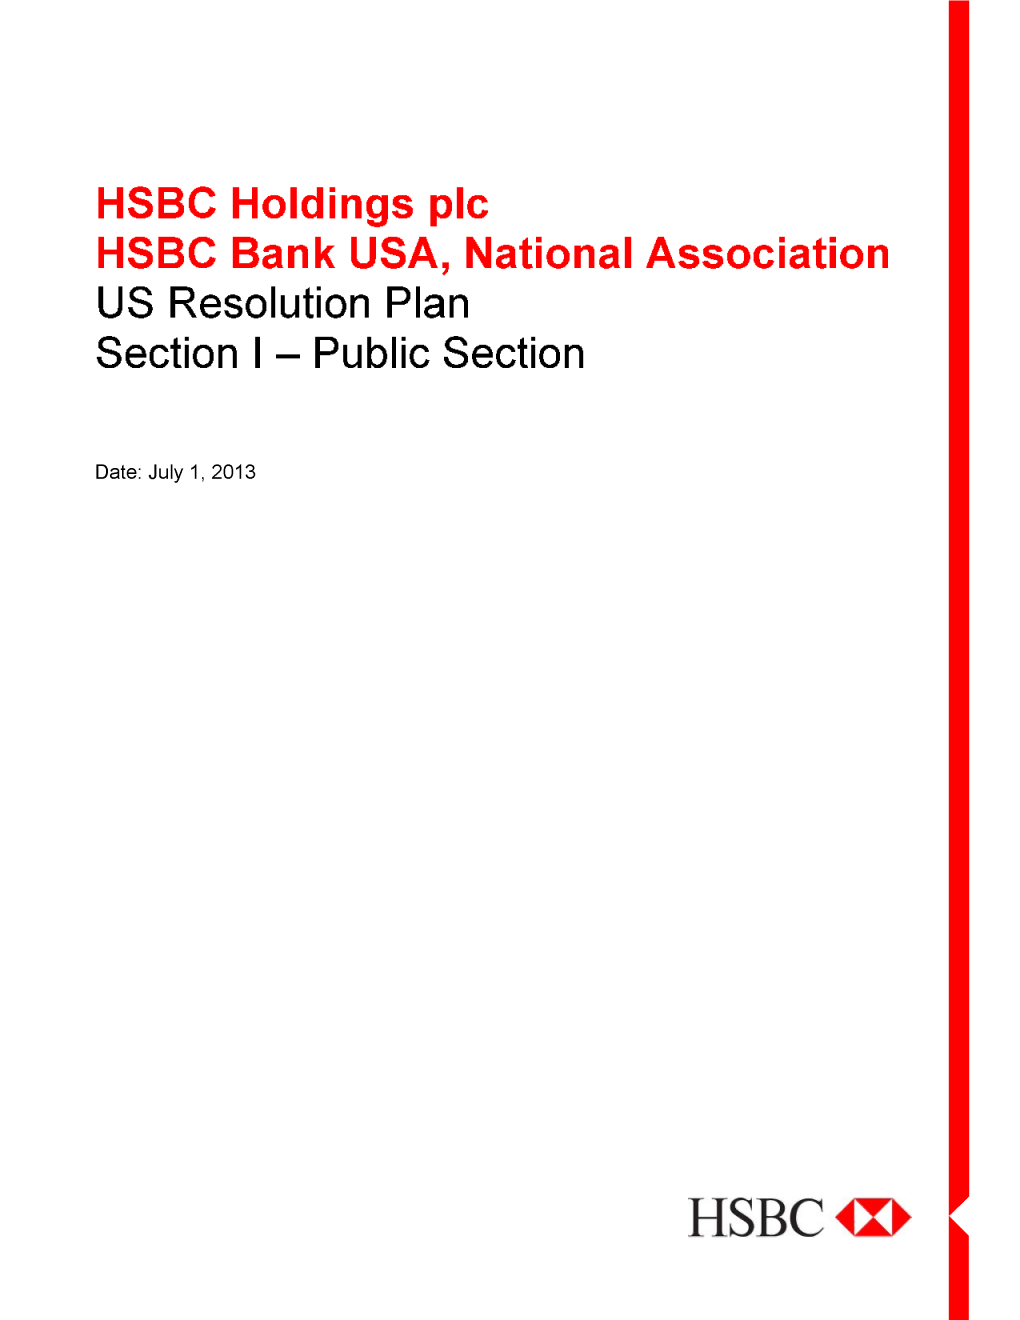 HSBC Resolution Plan